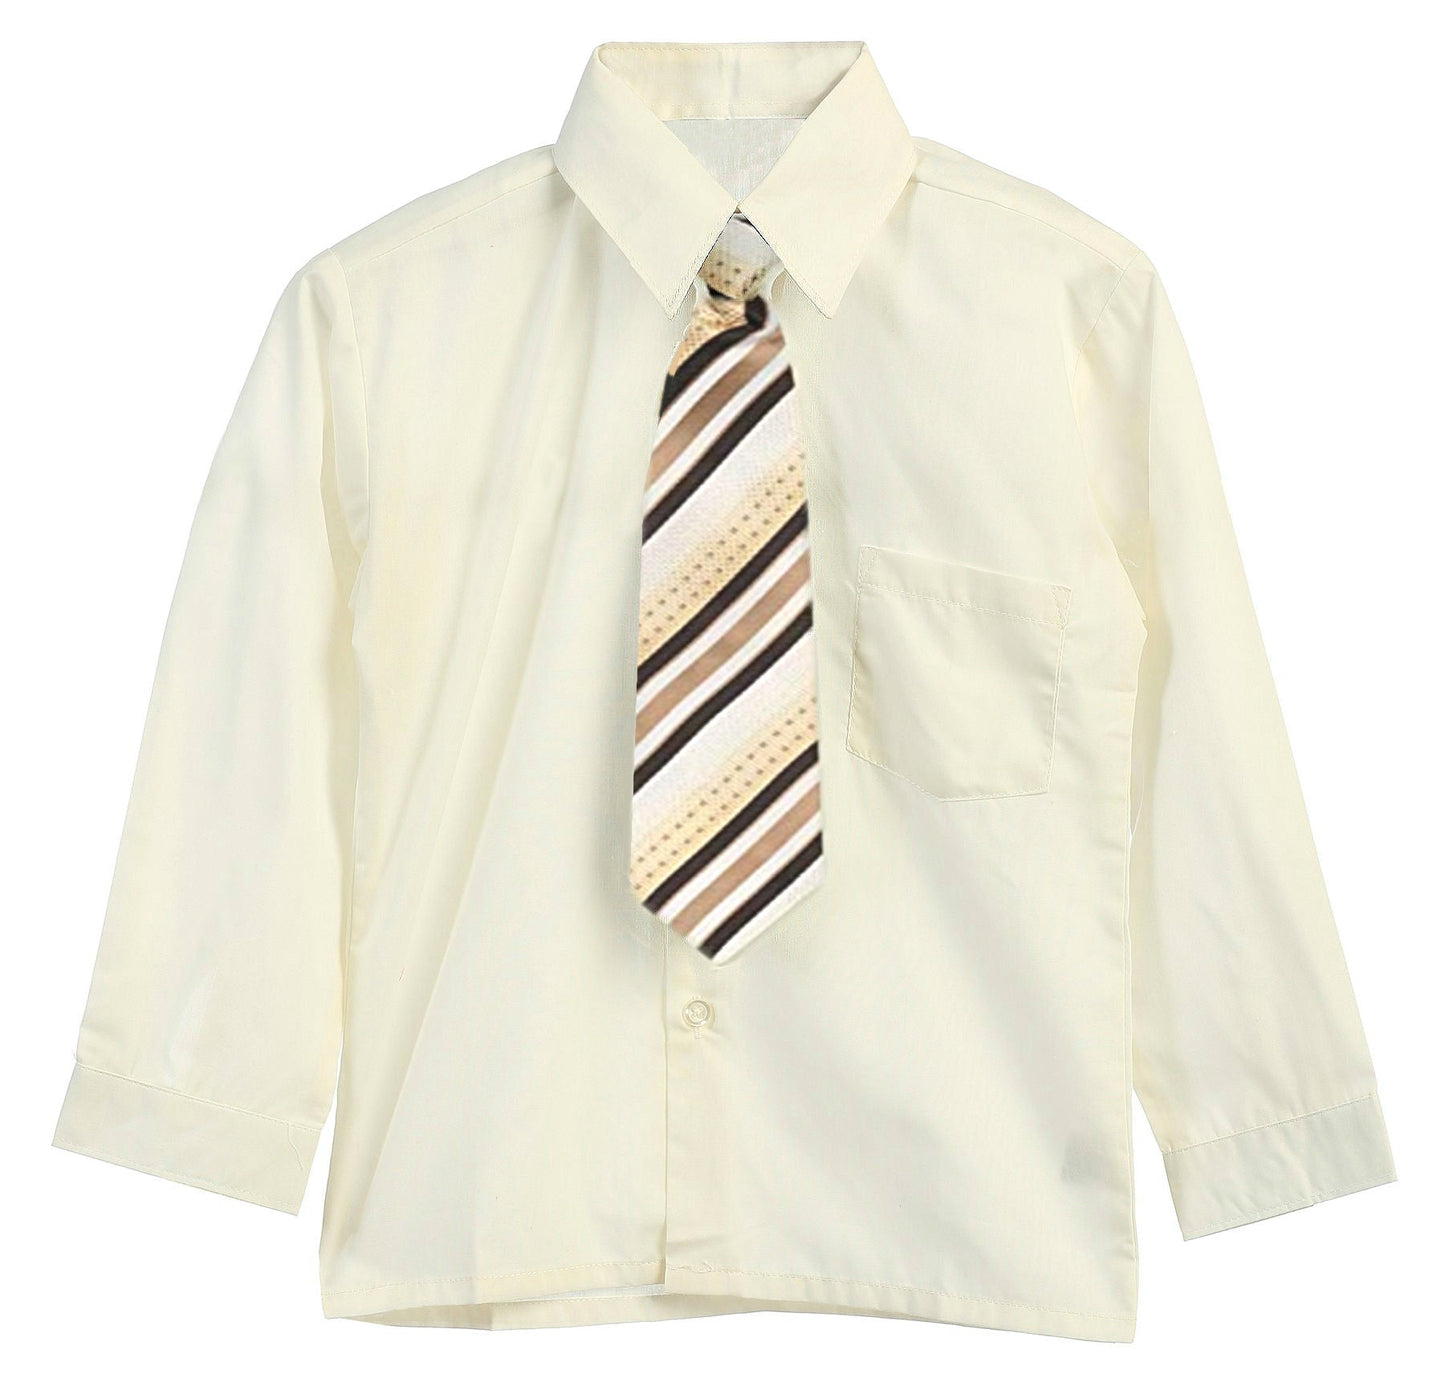 Wholesale Long Sleeve Boys Dress Shirt With Tie 5-7   RFL-858